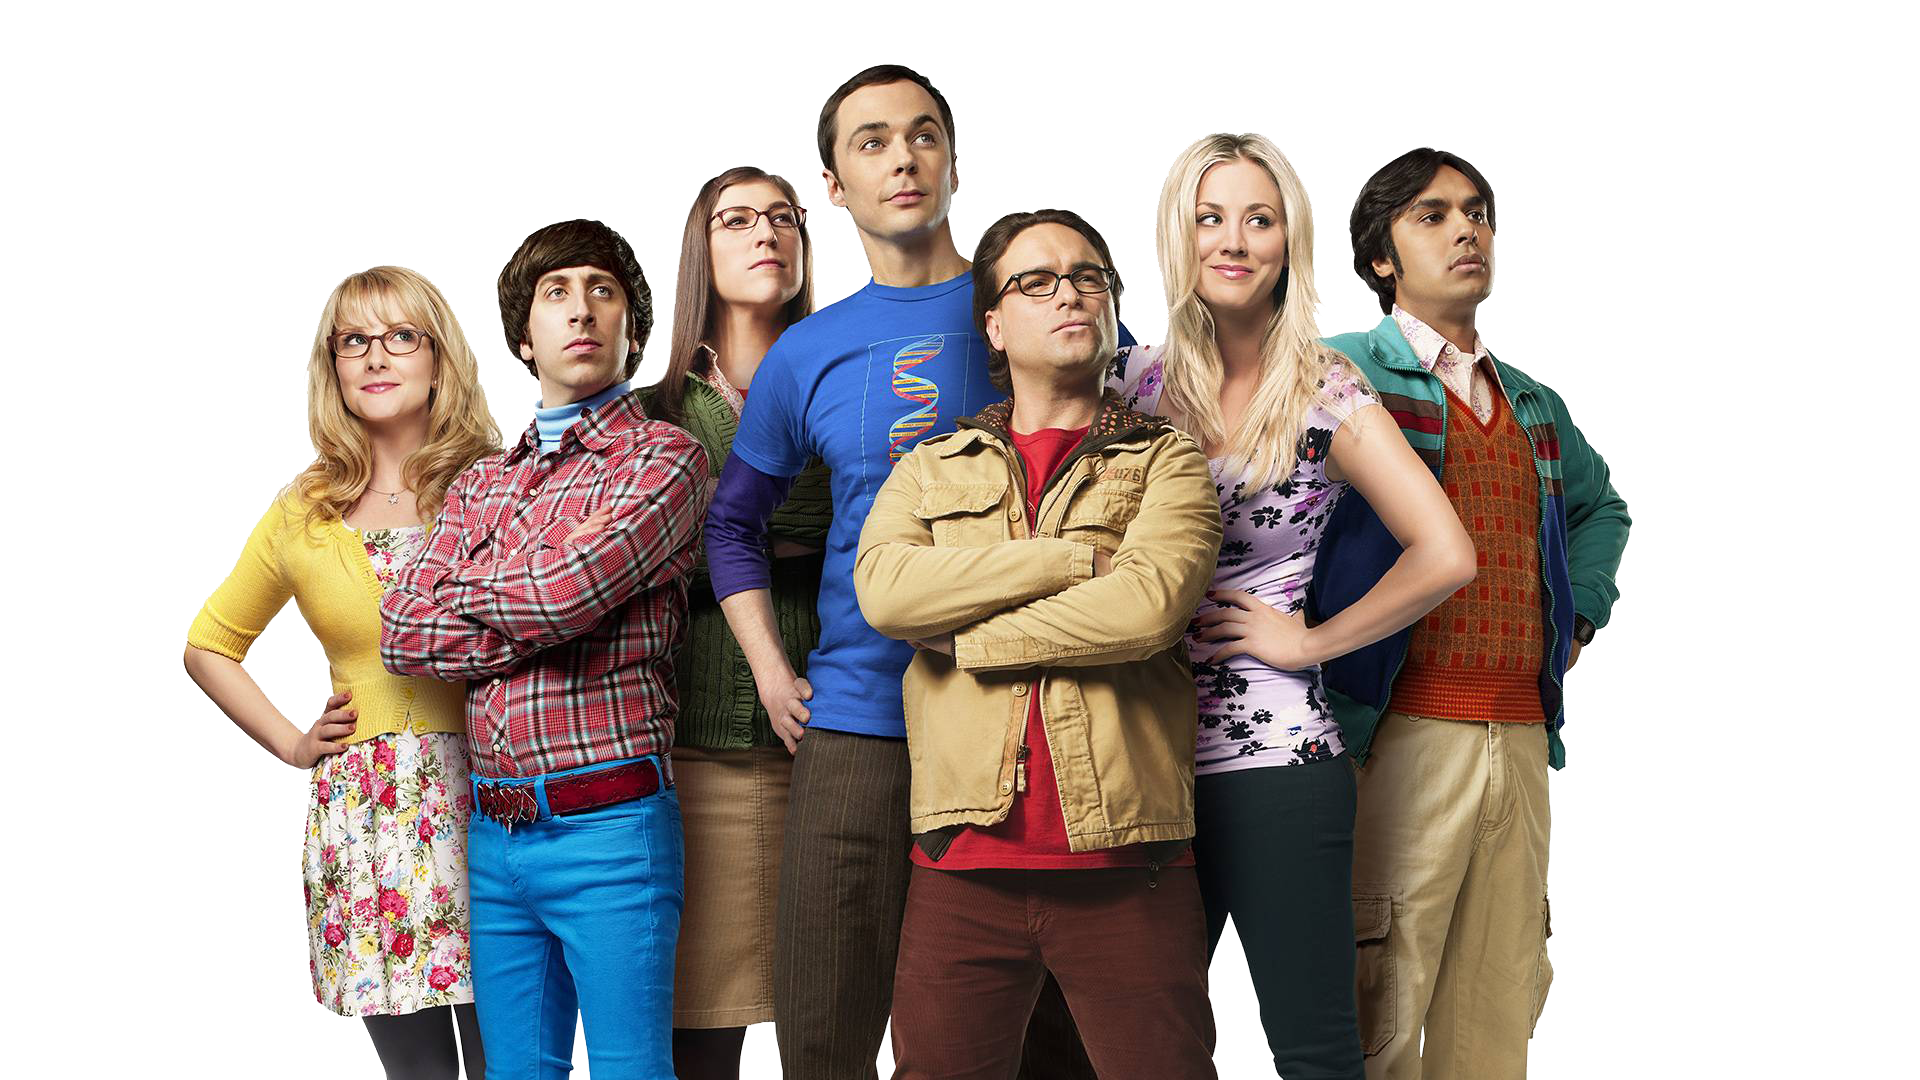 The Big Bang Theory Characters PNG High-Quality Image